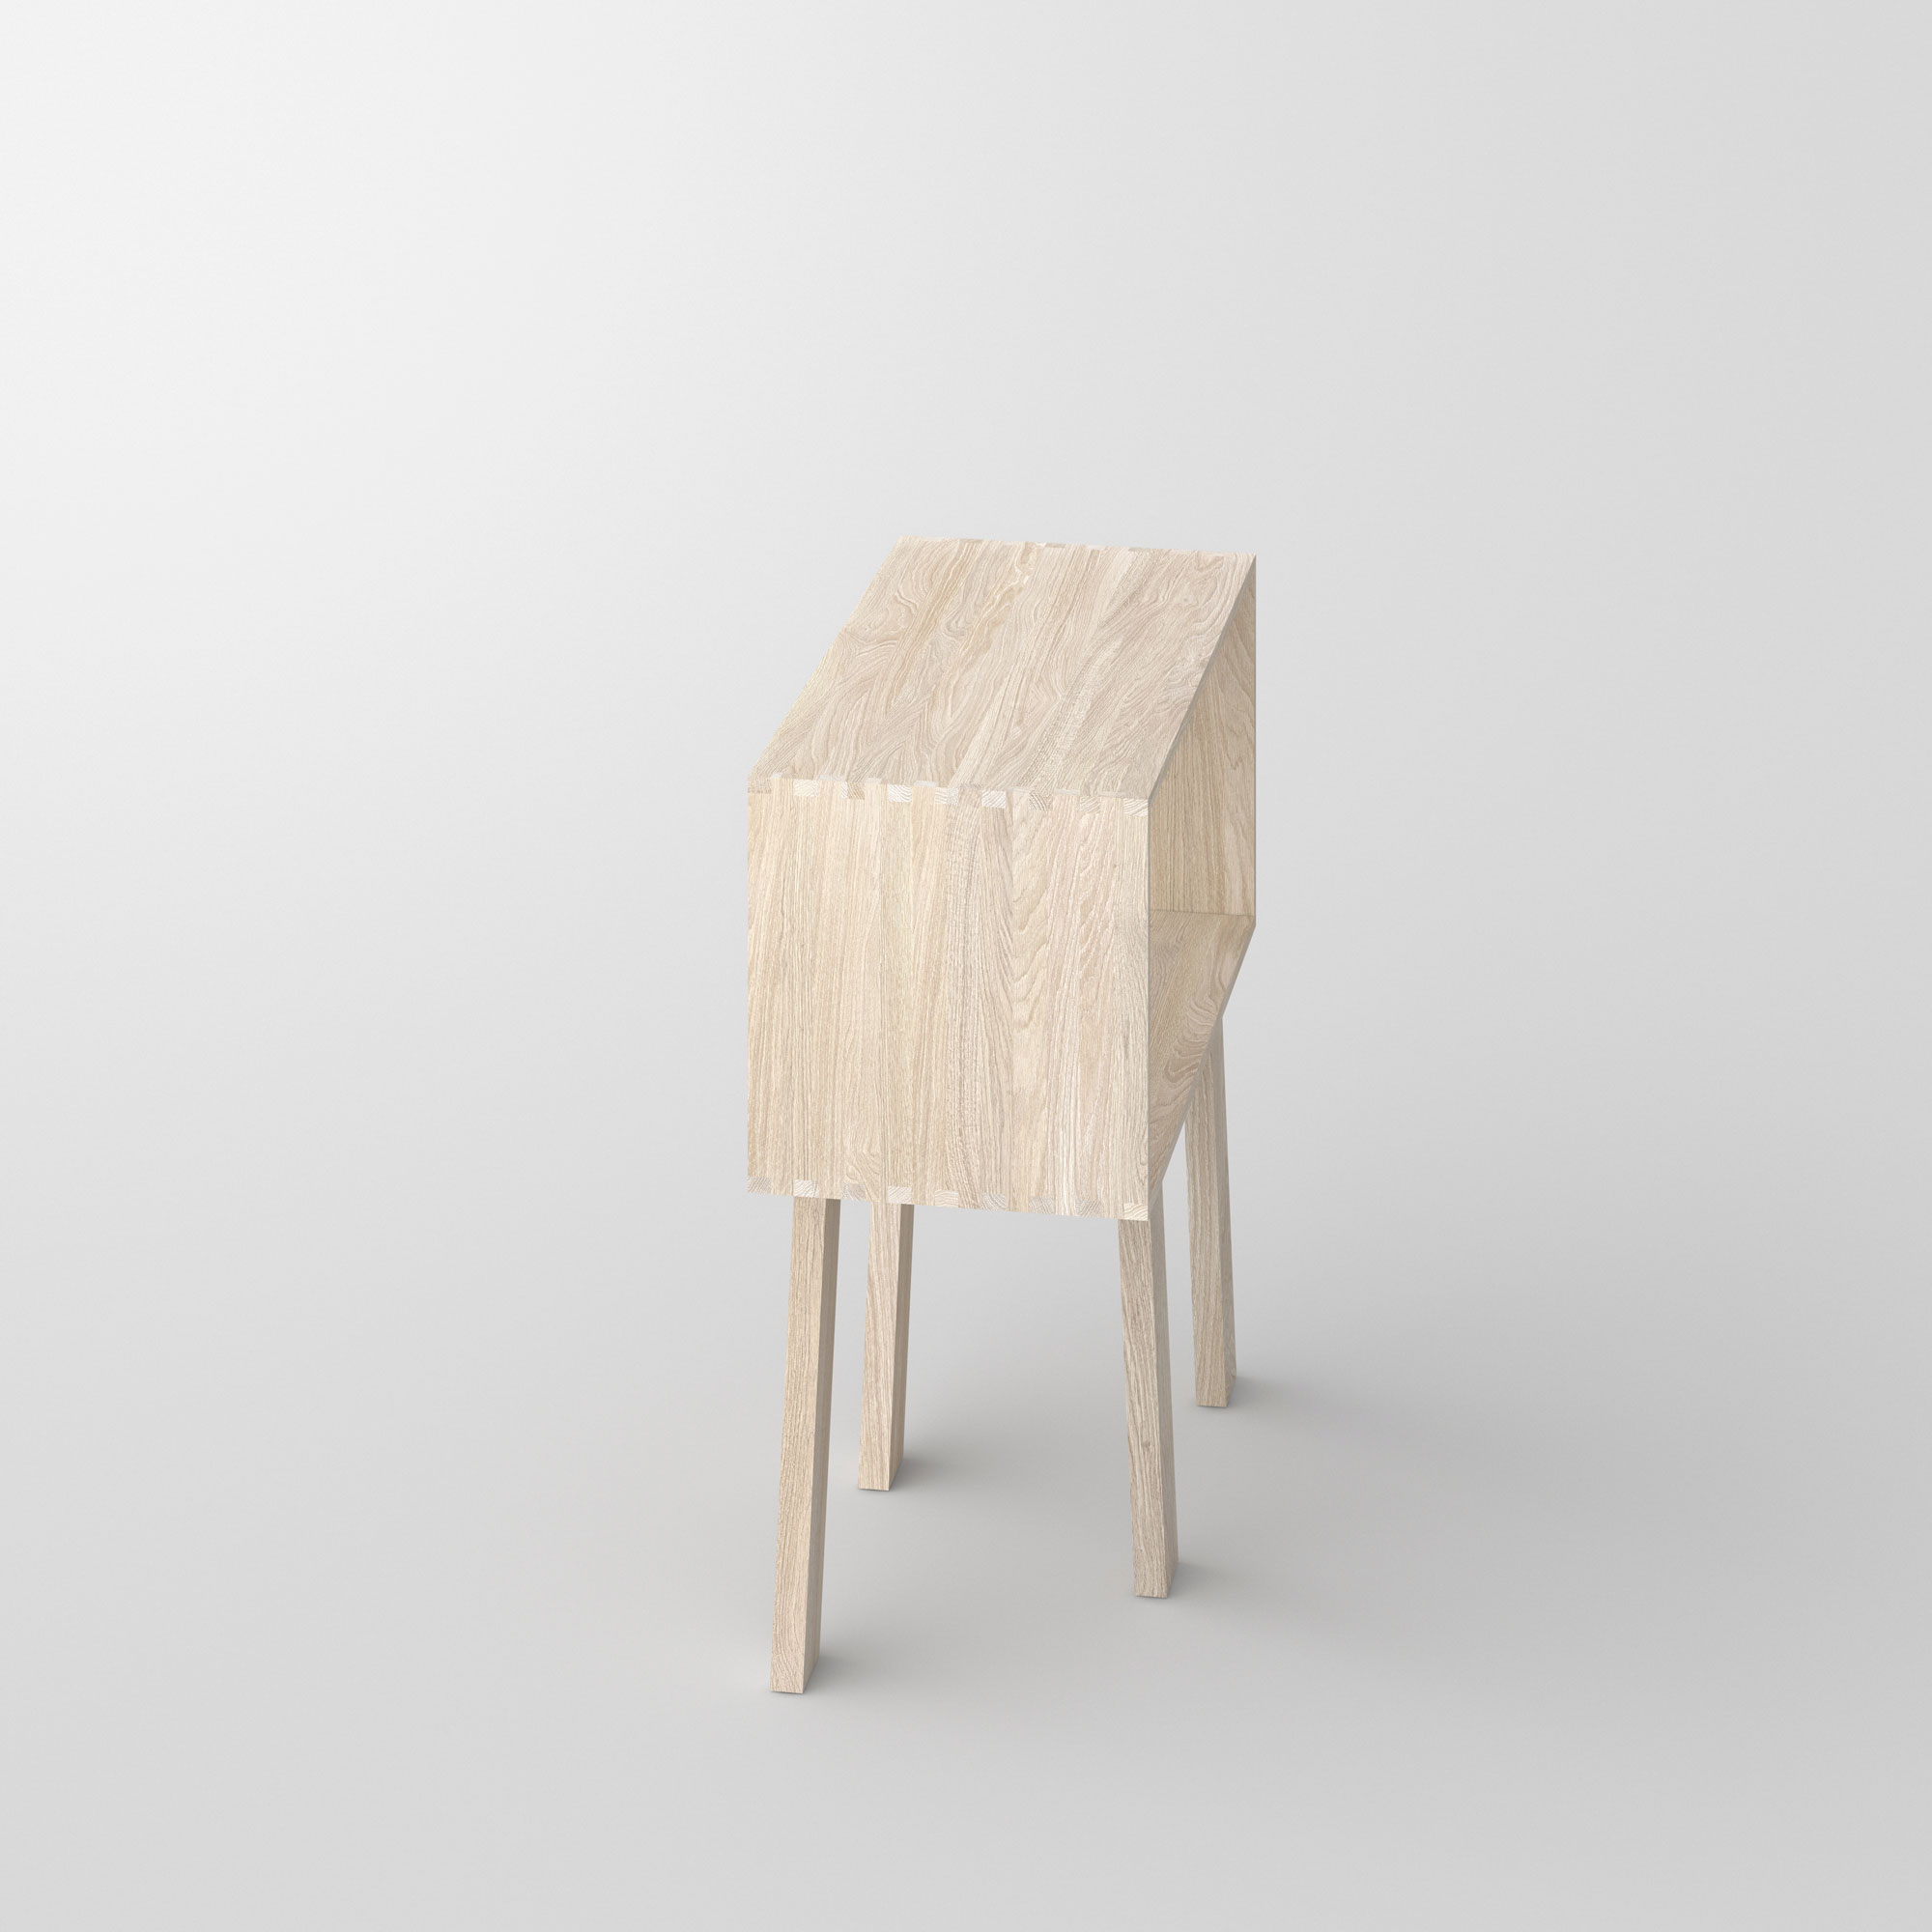 Solid Wood Shelf GO RW 0000 custom made in solid wood by vitamin design